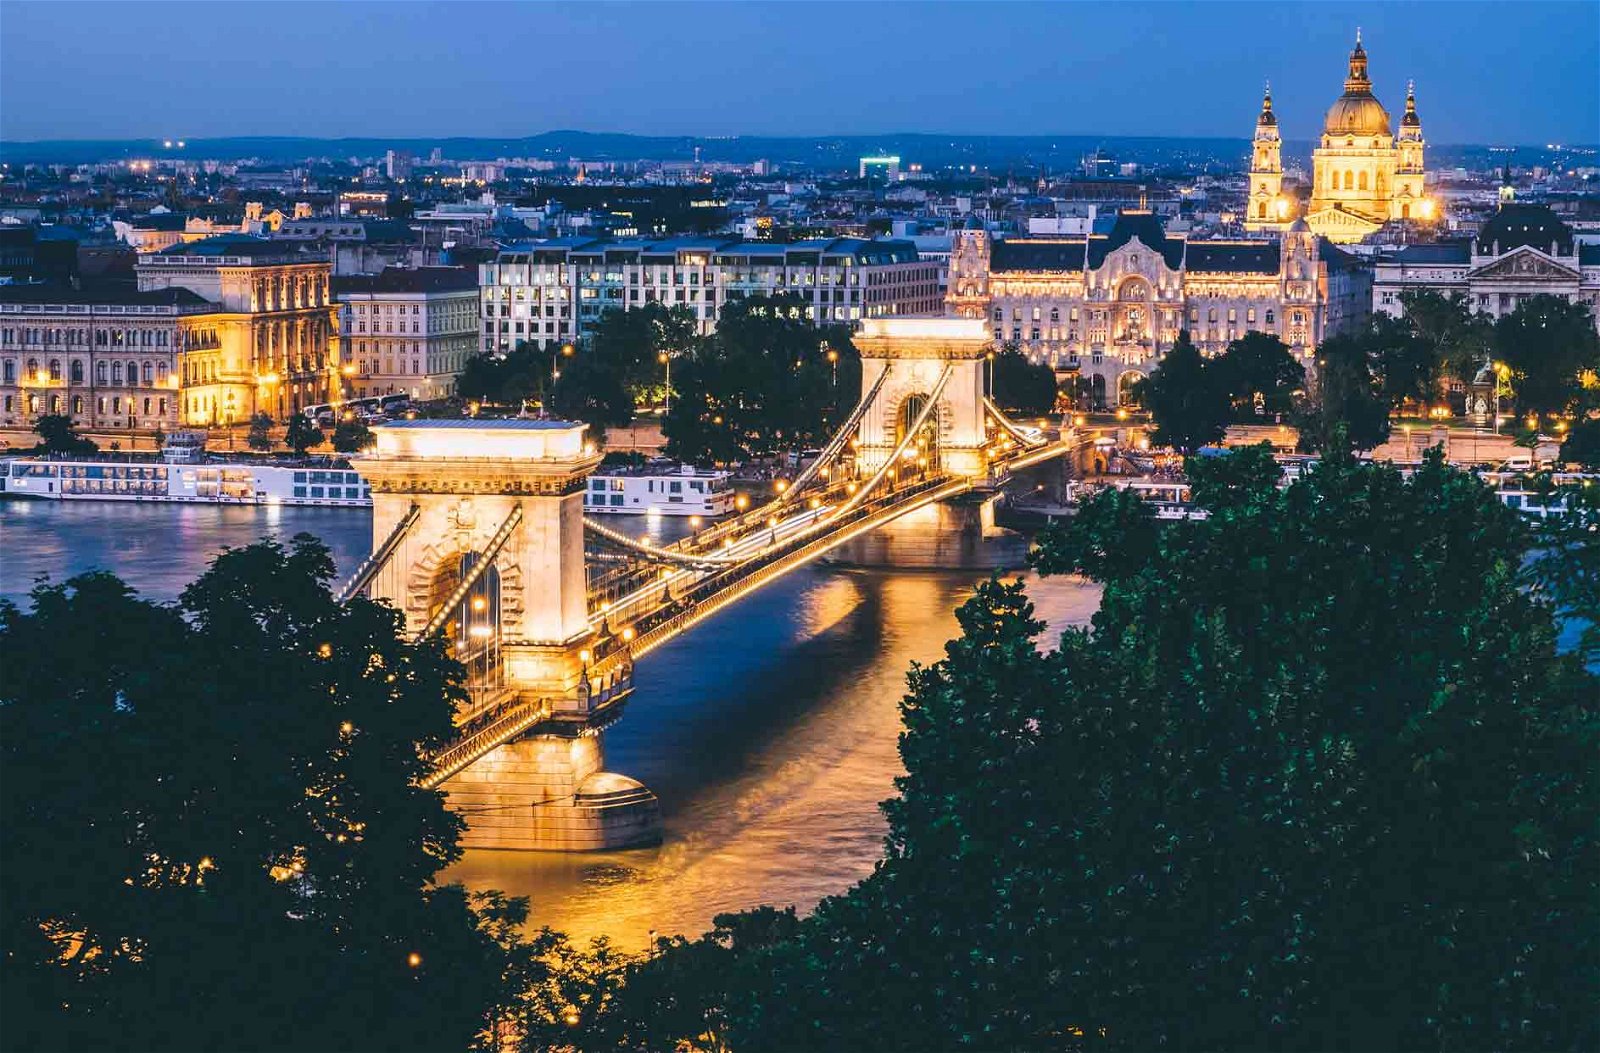 Budapest landscsape image.